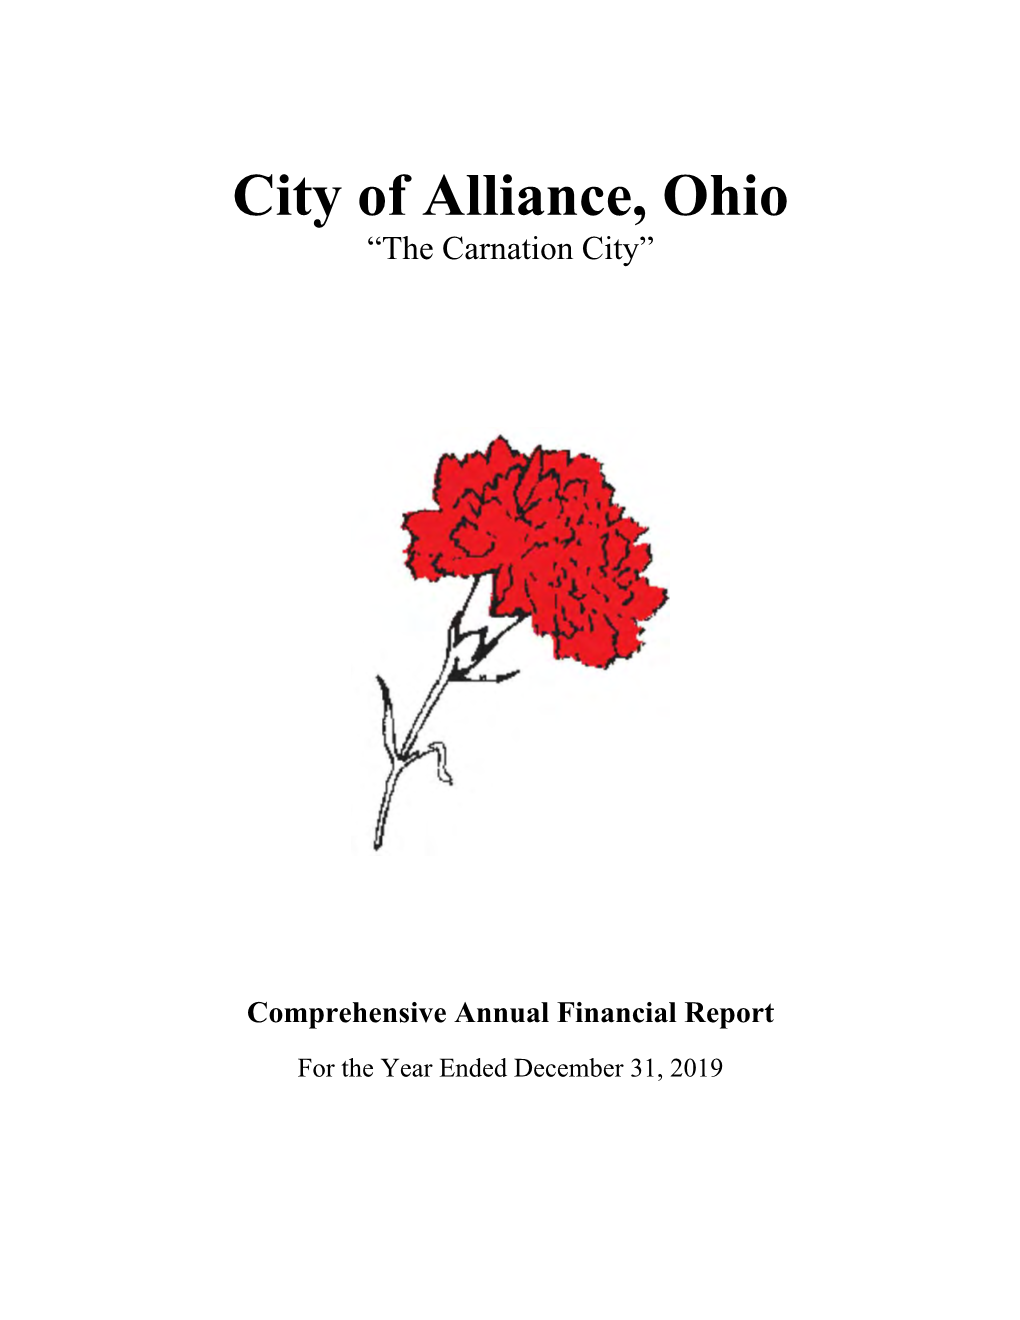 2019 Comprehensive Annual Financial Report